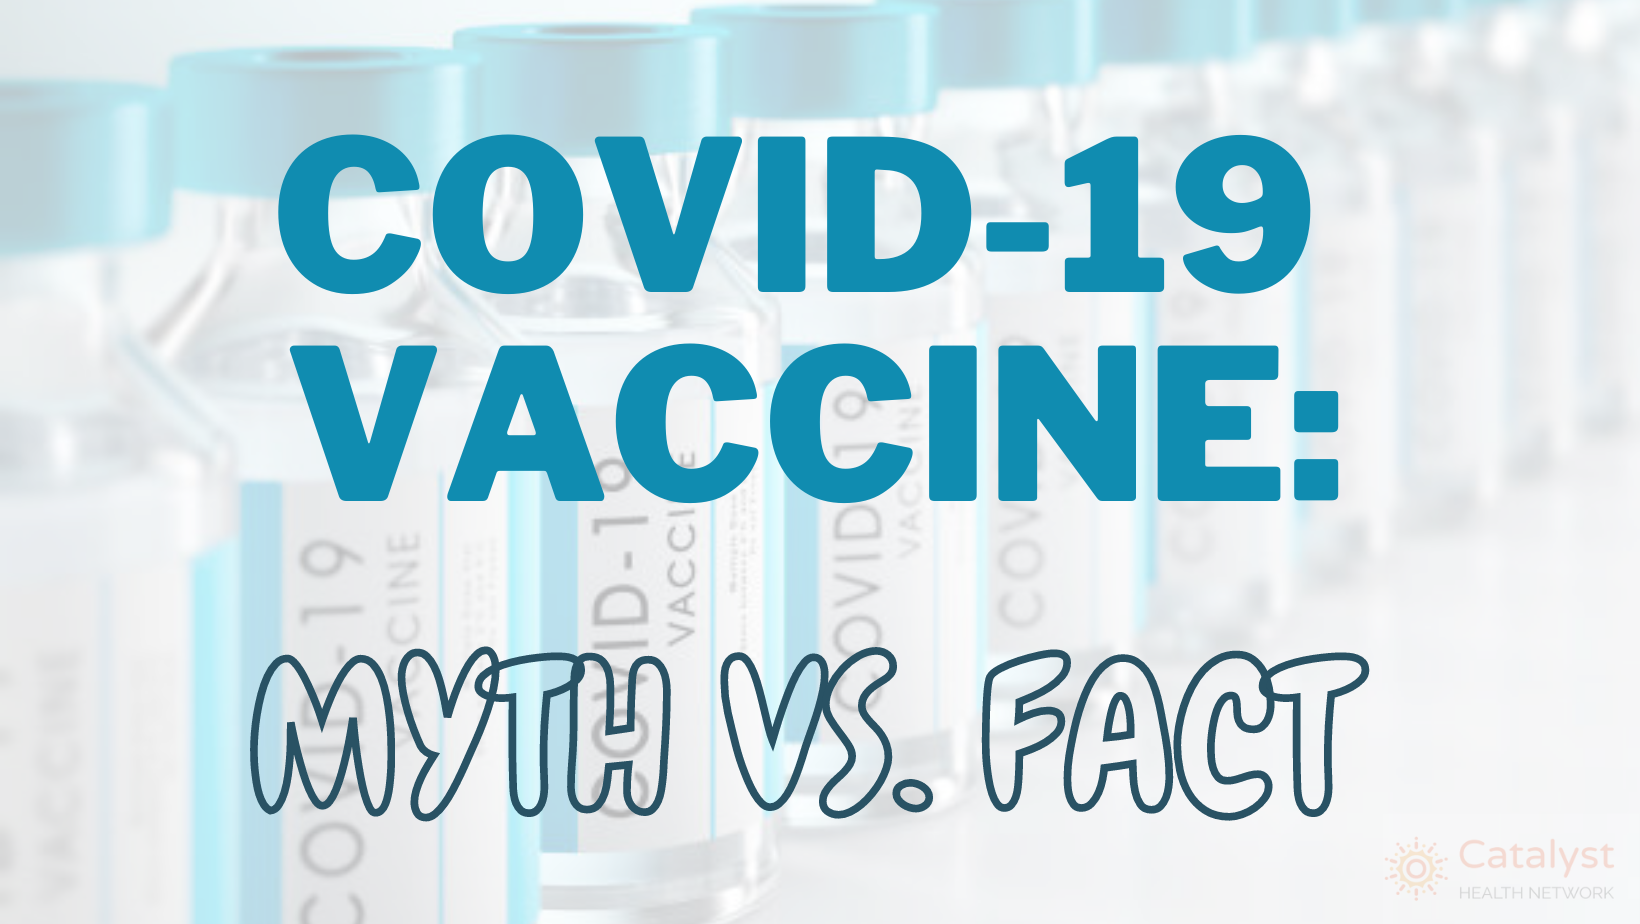 COVID-19 Vaccine: Myth vs Fact